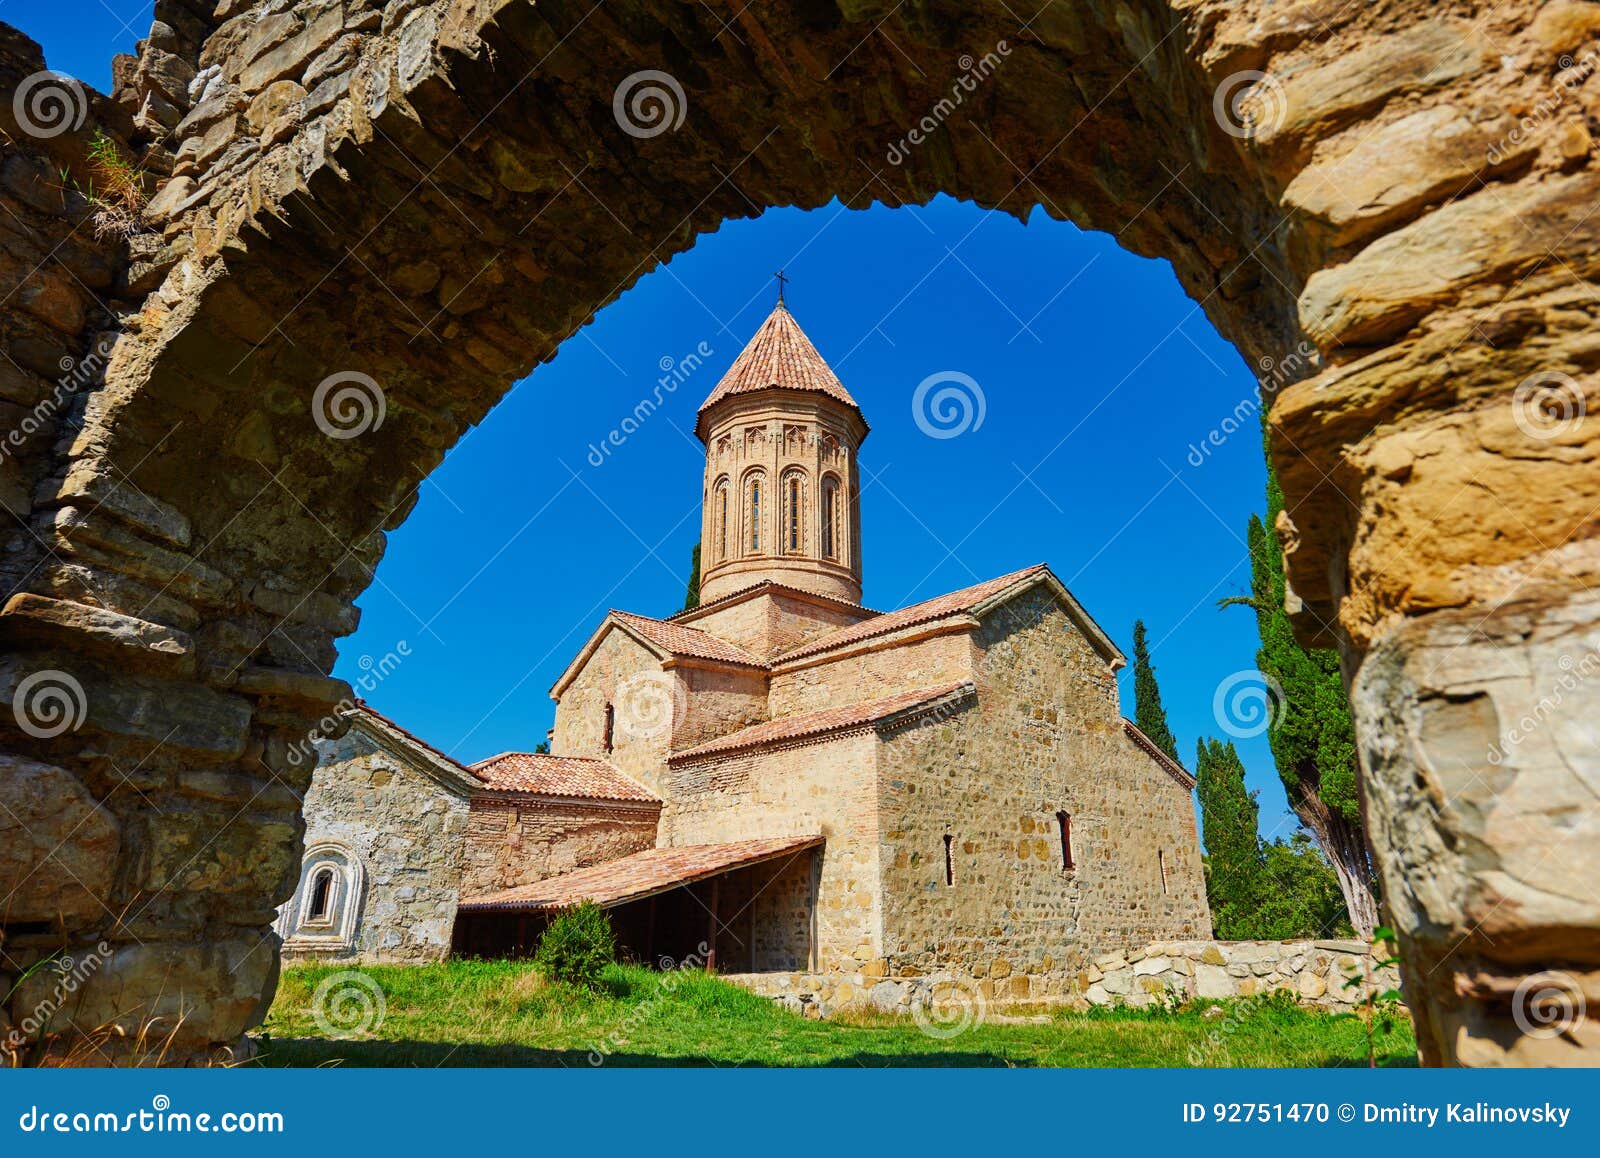 ikalto orthodox monastery complex and academy in kakheti georgia